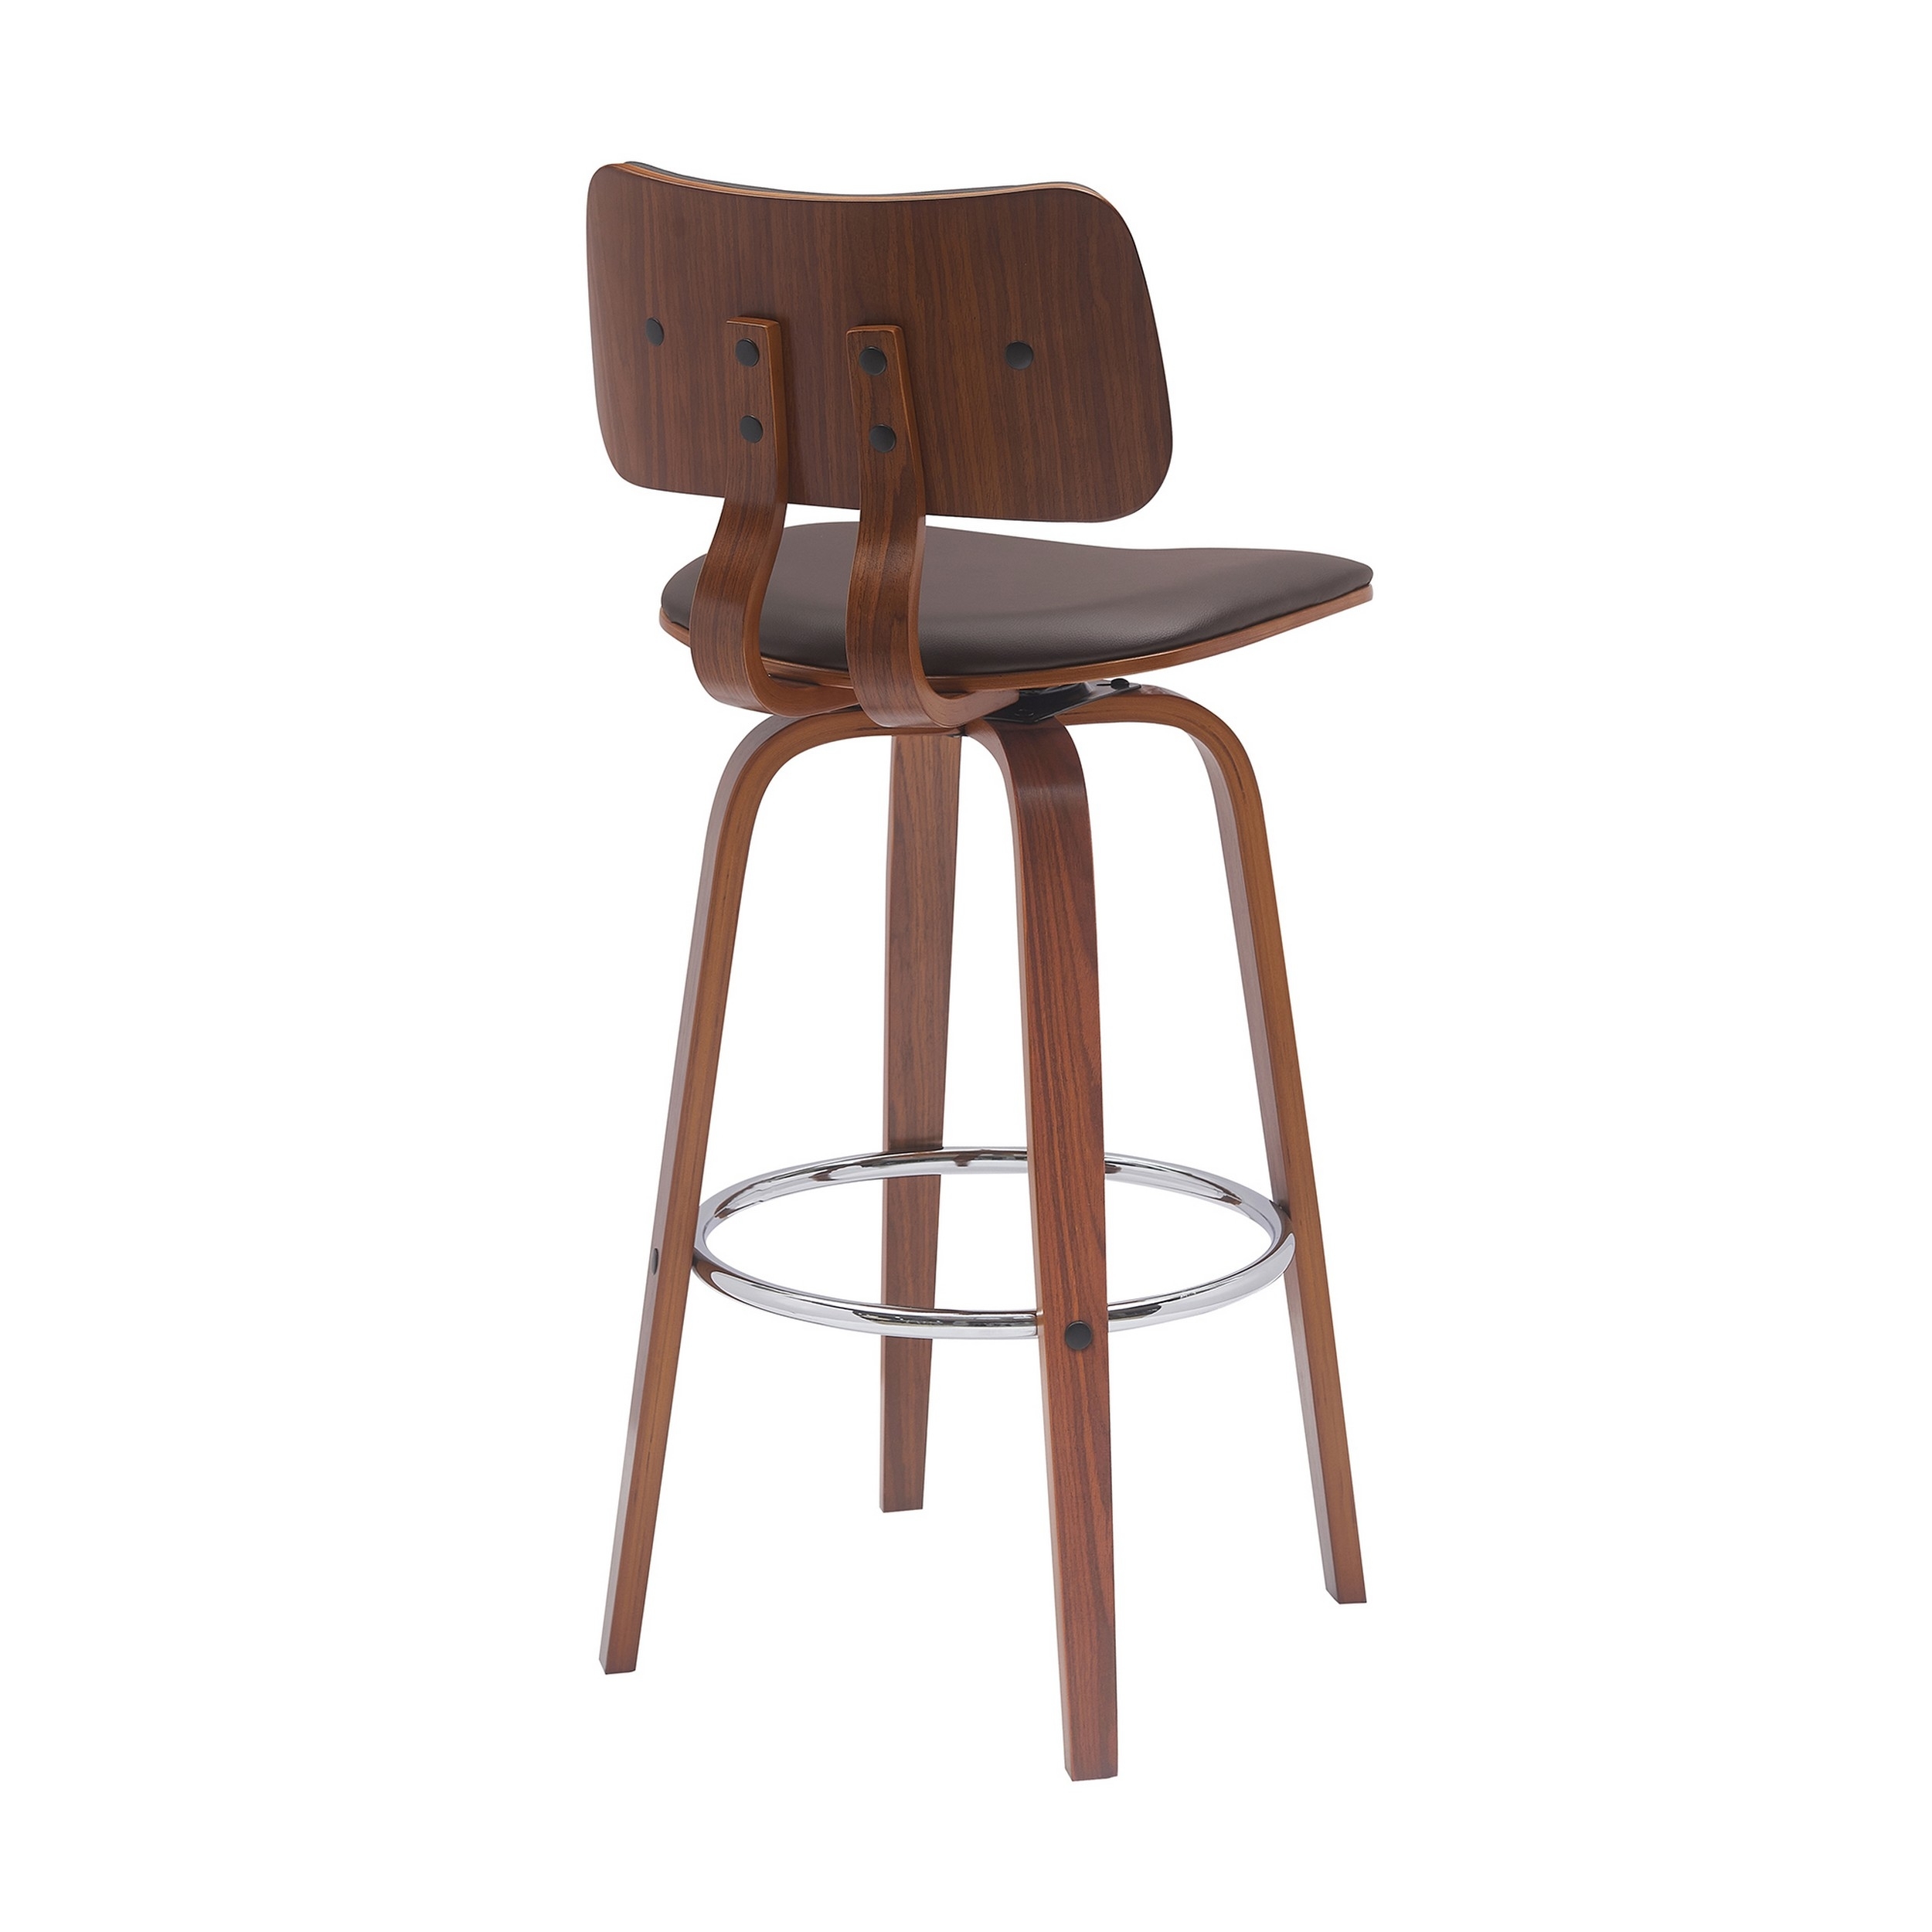 Pino 30 Inch Swivel Barstool Chair, Brown Faux Leather Walnut Brown Wood - Saltoro Sherpi